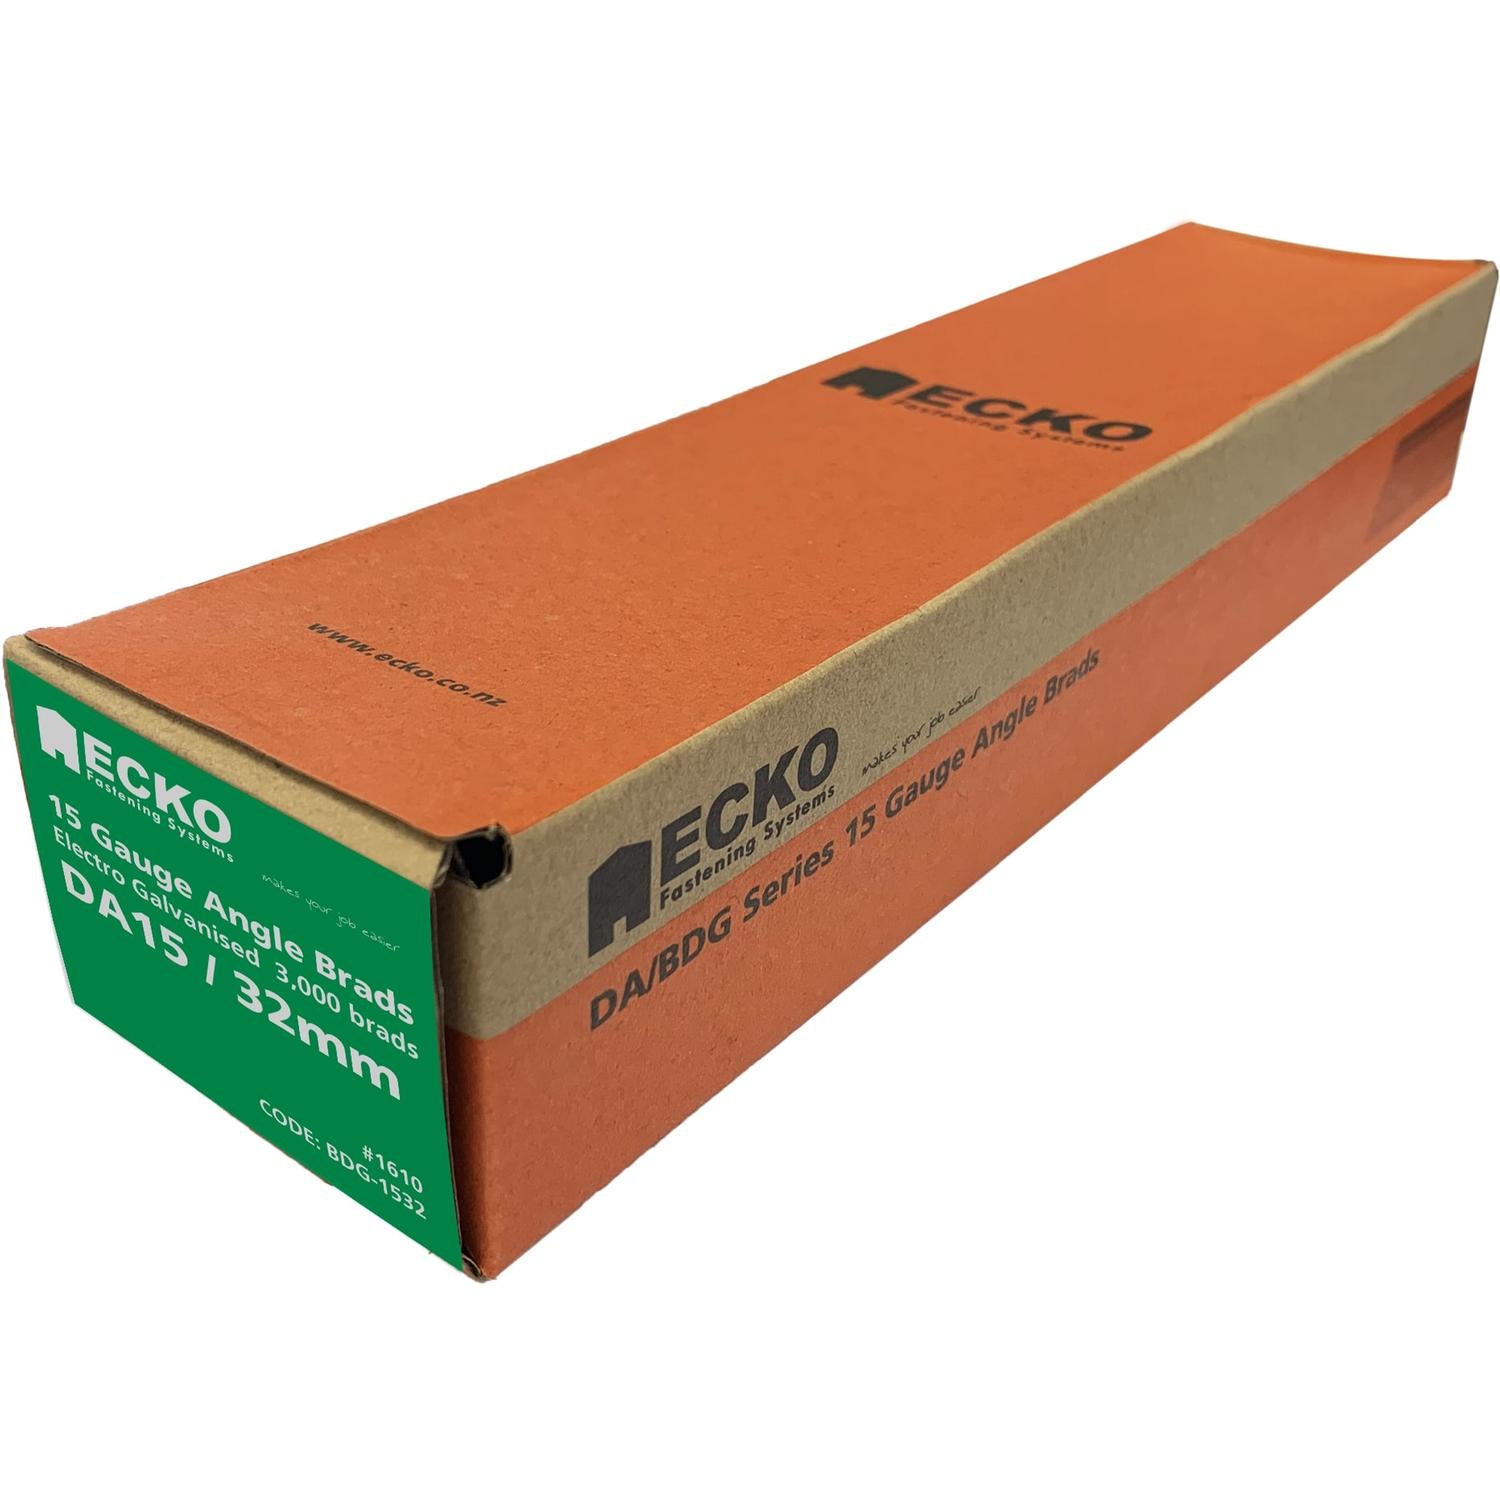 Ecko 15G X 32Mm Angle Brads Electro Galvanised (1000 Box)